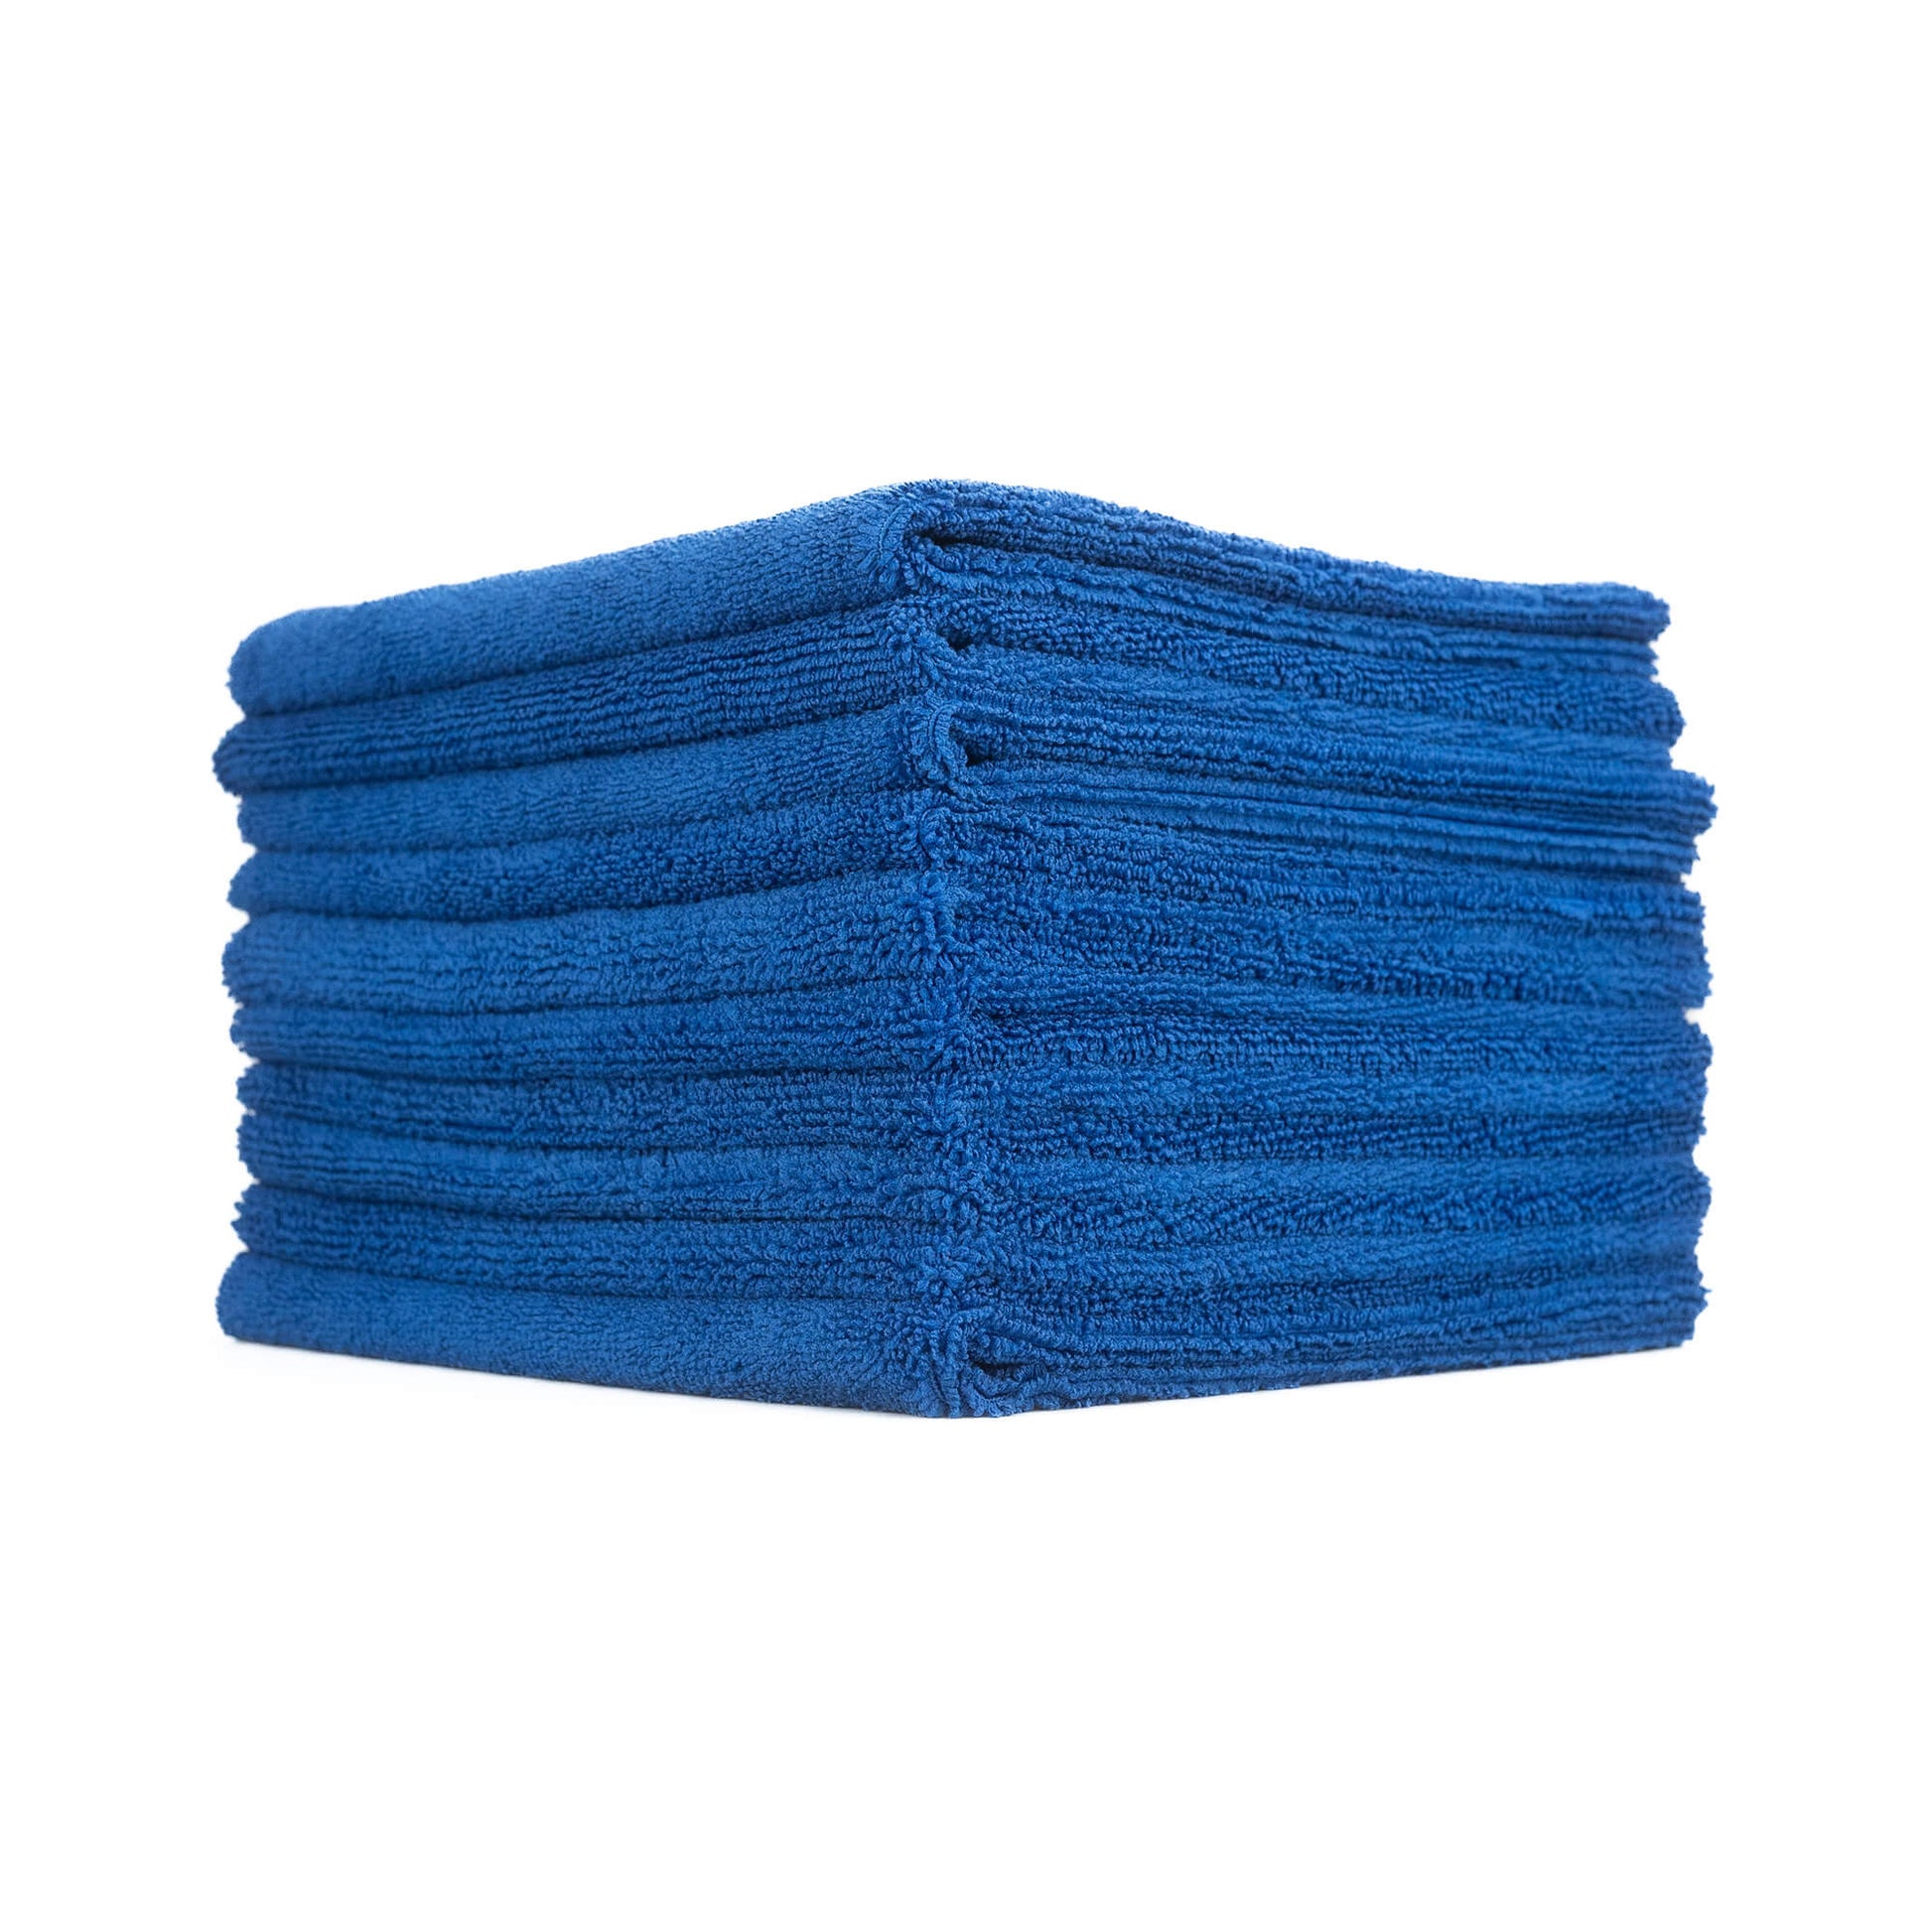 Edgeless 365 Premium Microfiber Terry Detailing Towel - 10 Pack Royal Blue